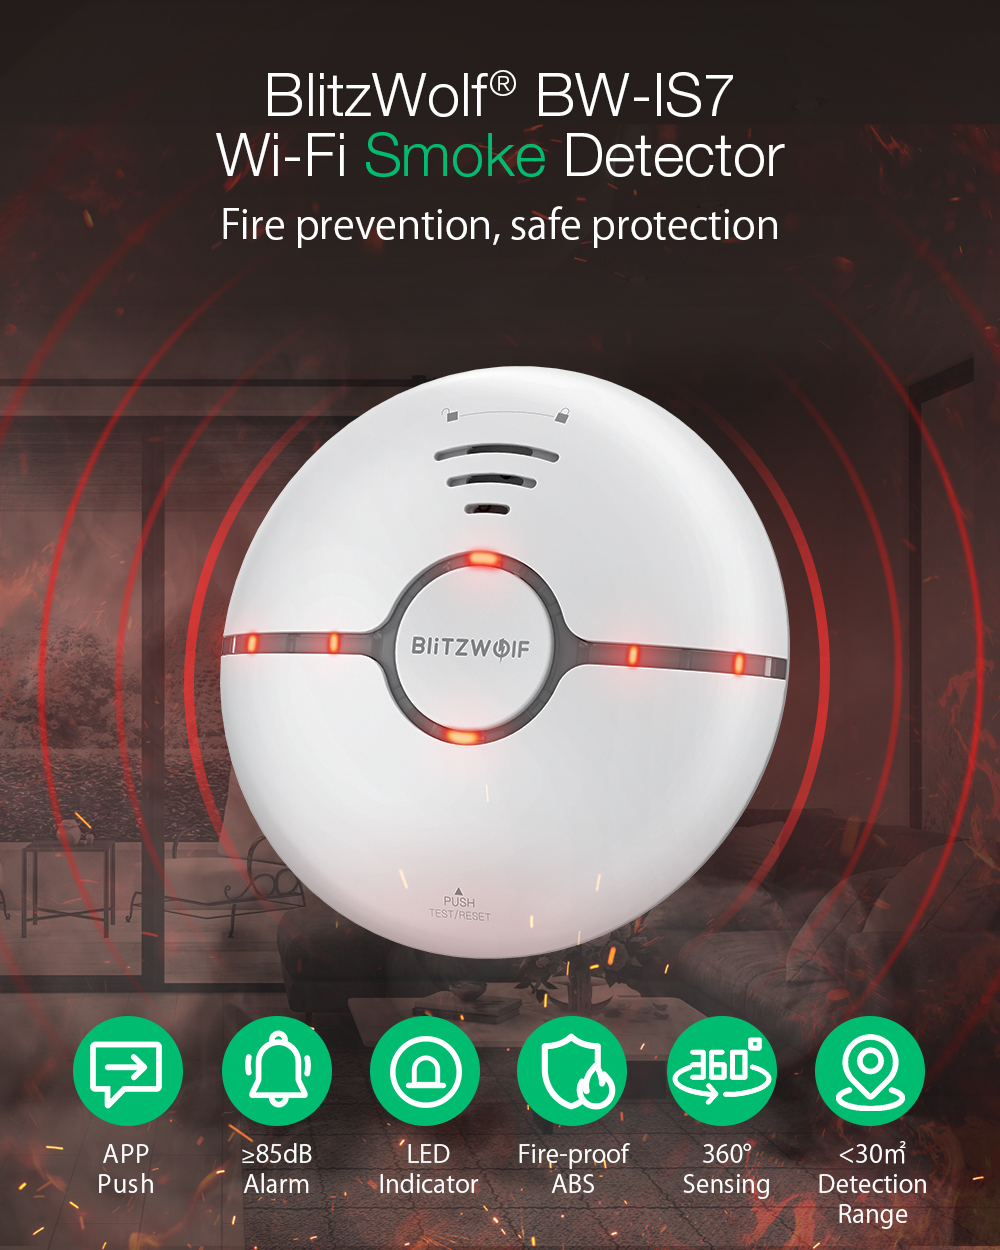 Blitzwolf BW-IS7 smart smoke detector